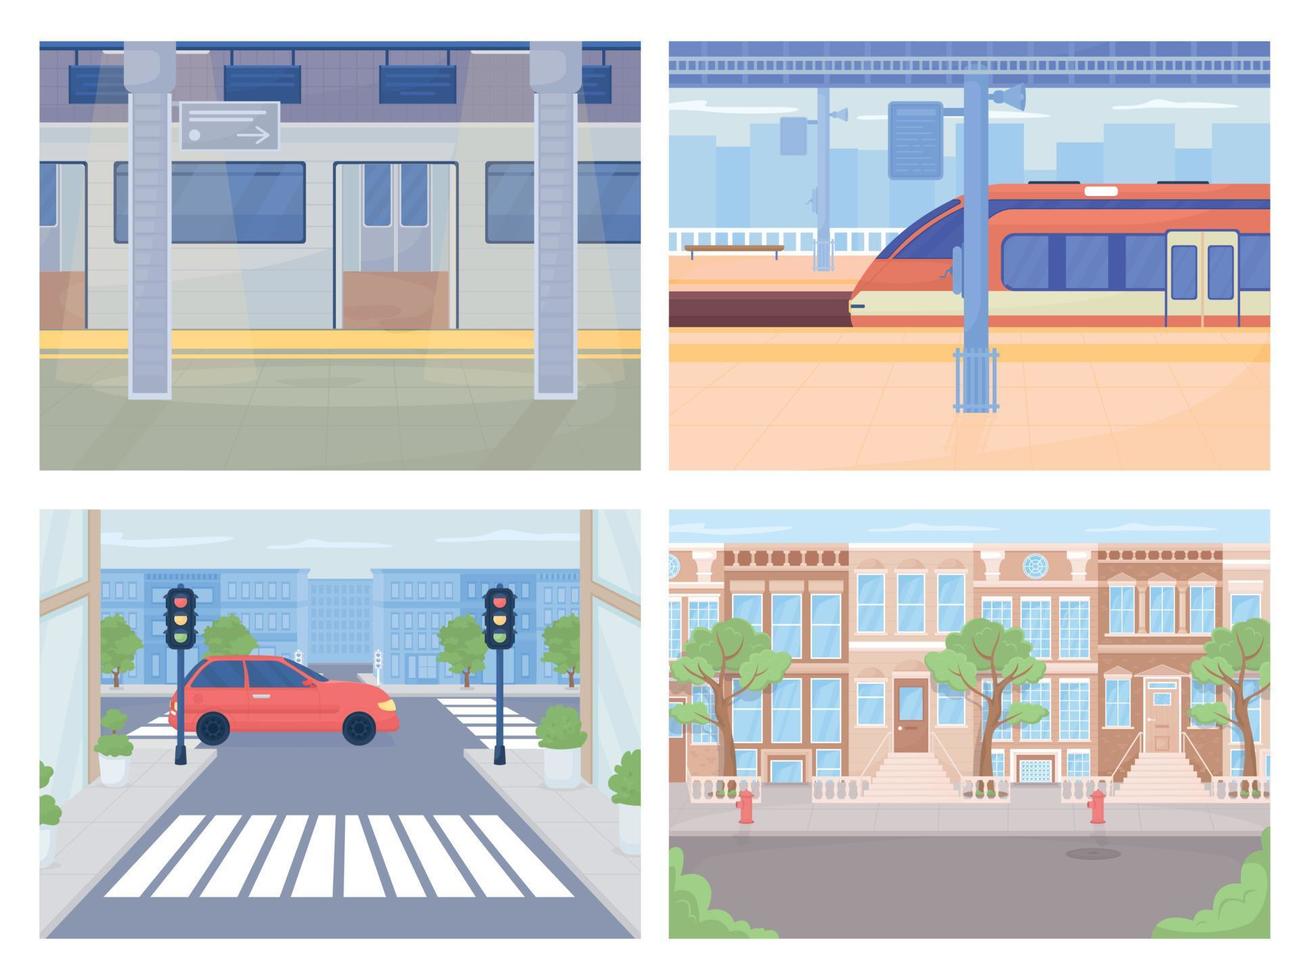 Public transportation in city lat color vector illustration set